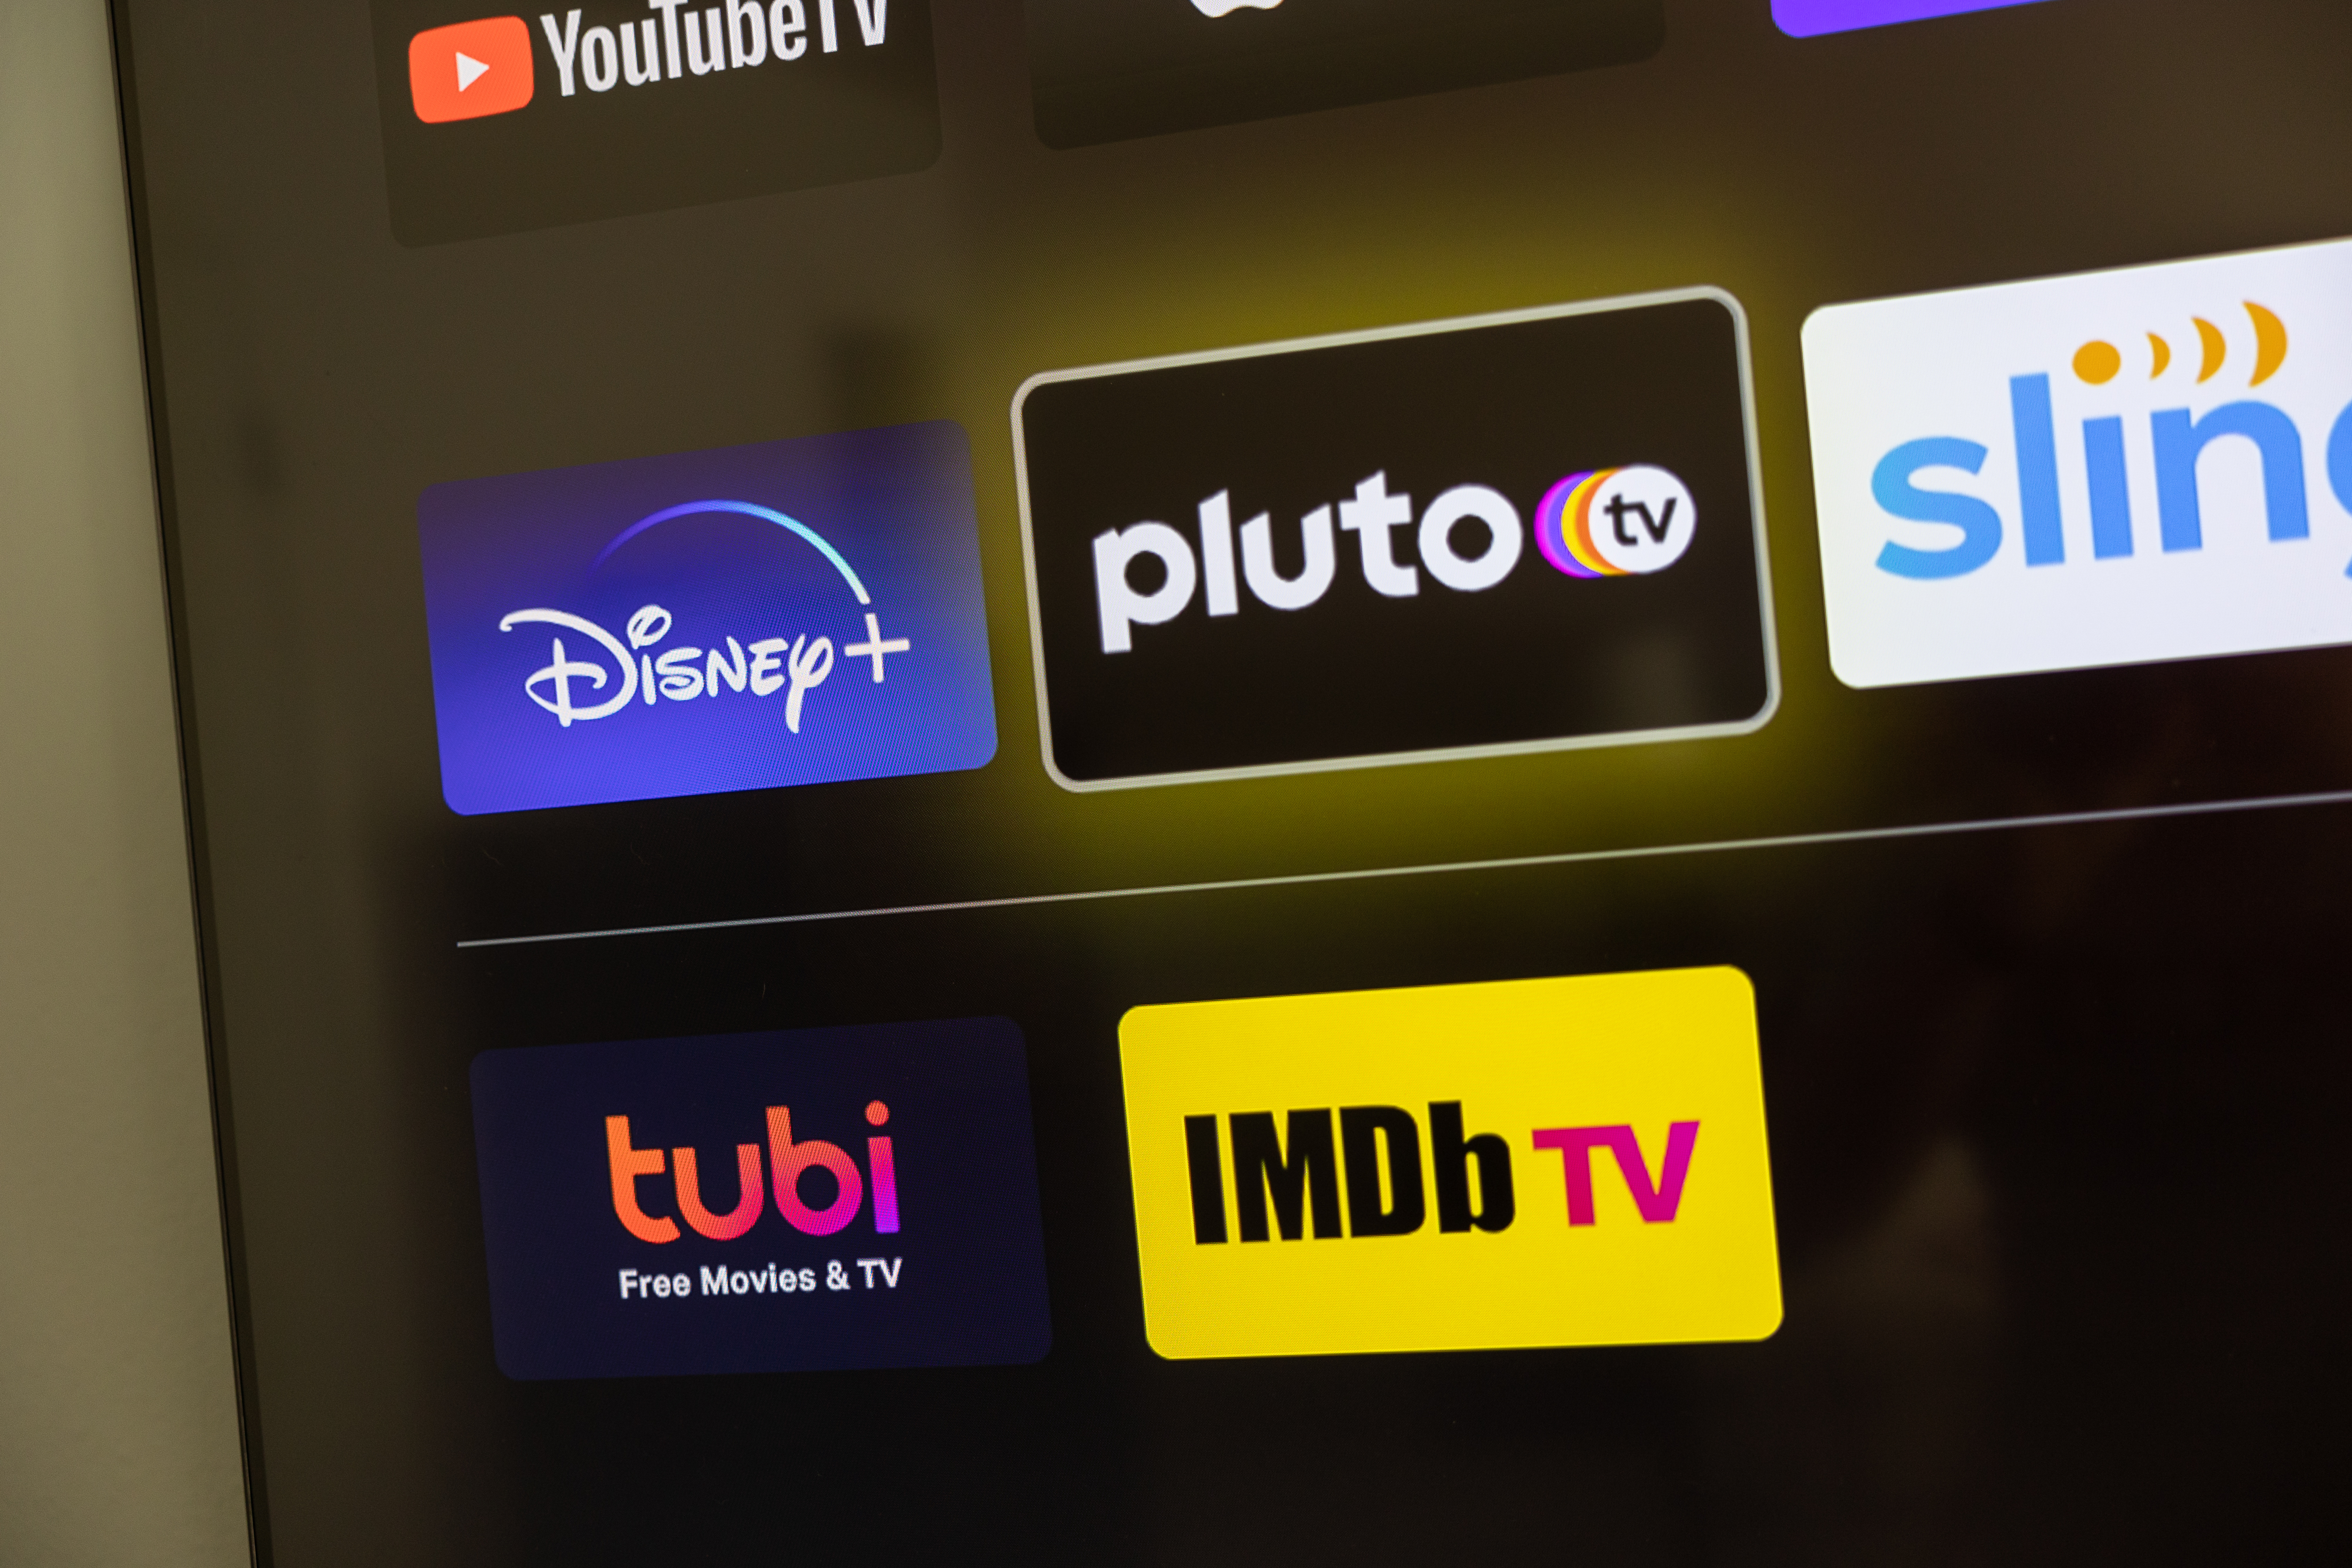 Apple TV App Now Available on Chromecast With Google TV